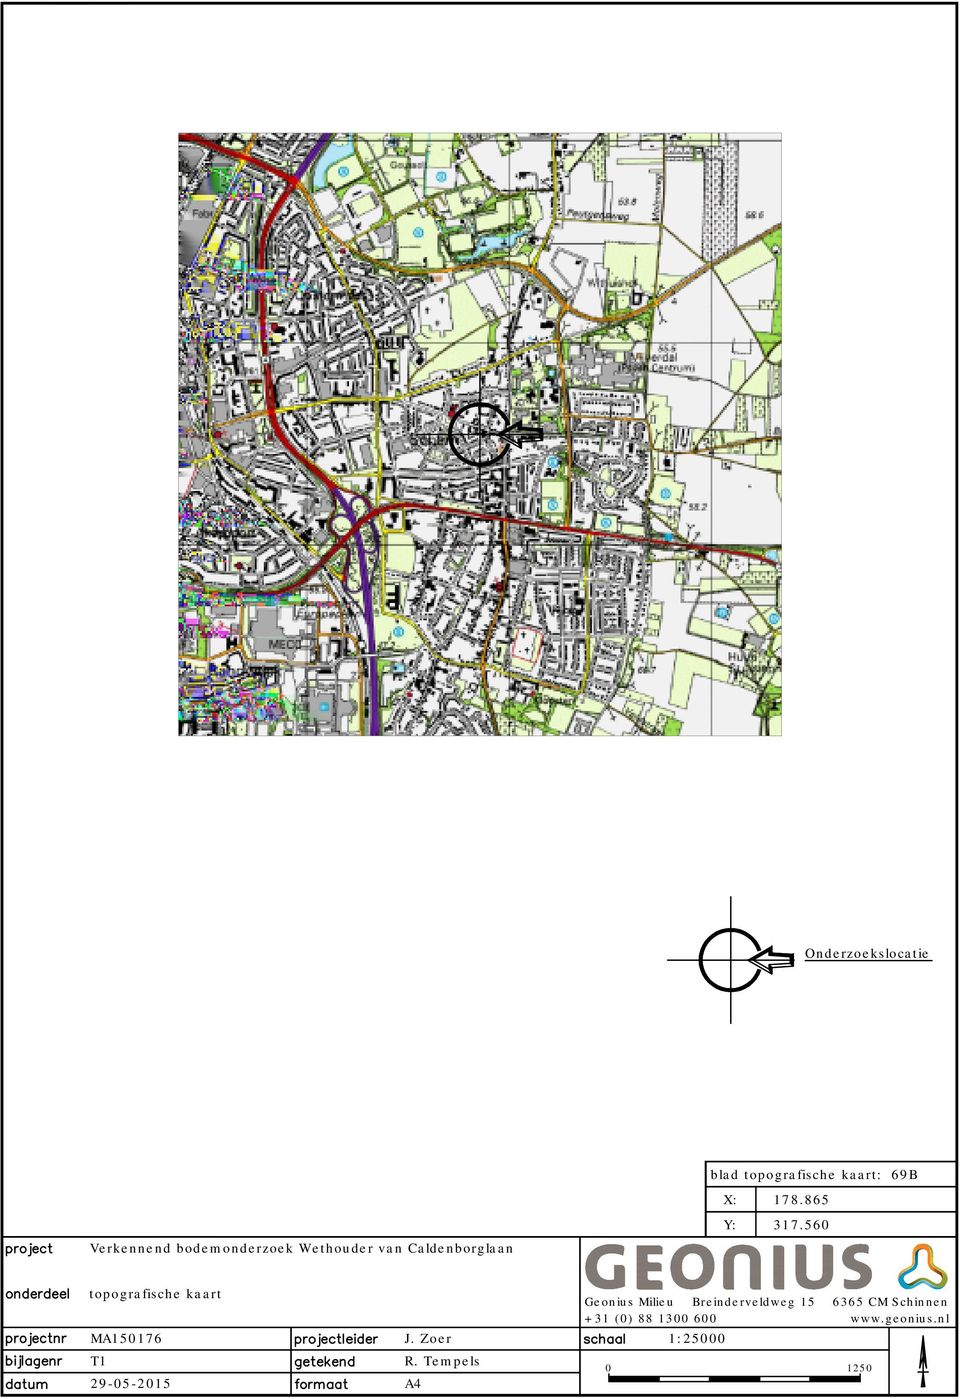 560 topografische kaart MA150176 T1 29-05-2015 J. Zoer R.